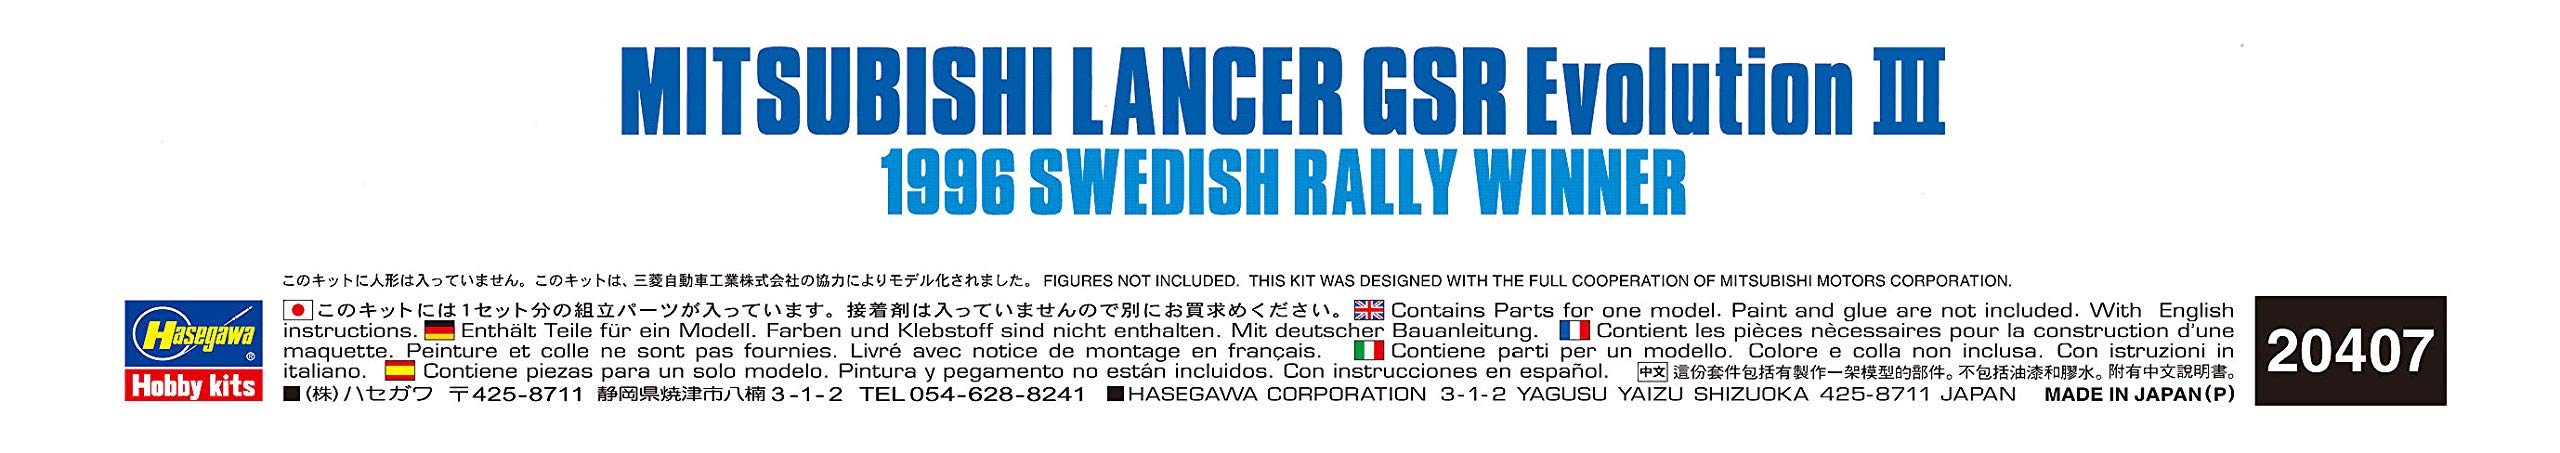 Hasegawa 20407 Mitsubishi Lancer Evolution III 1996 vainqueur du rallye suédois voitures à l'échelle 1/24